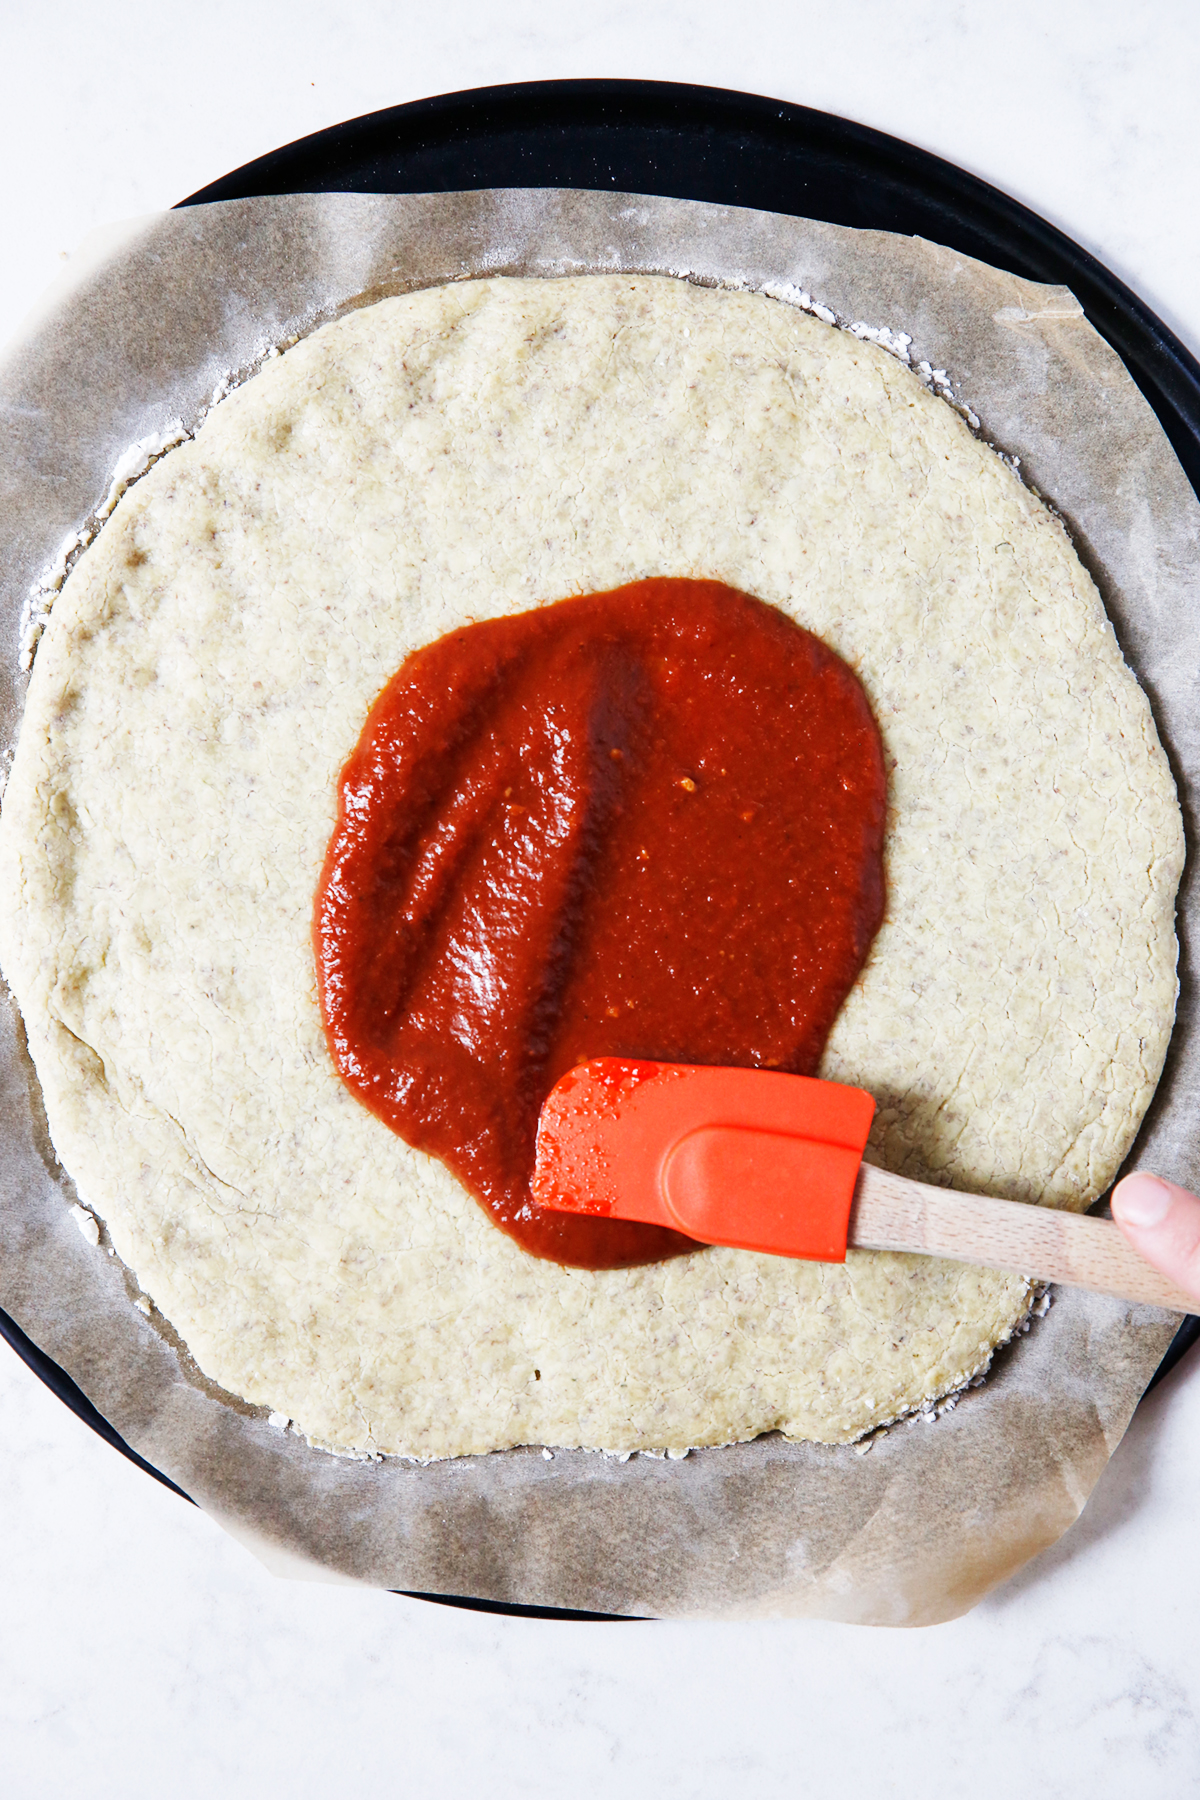 Spreading bbq sauce on pizza crust